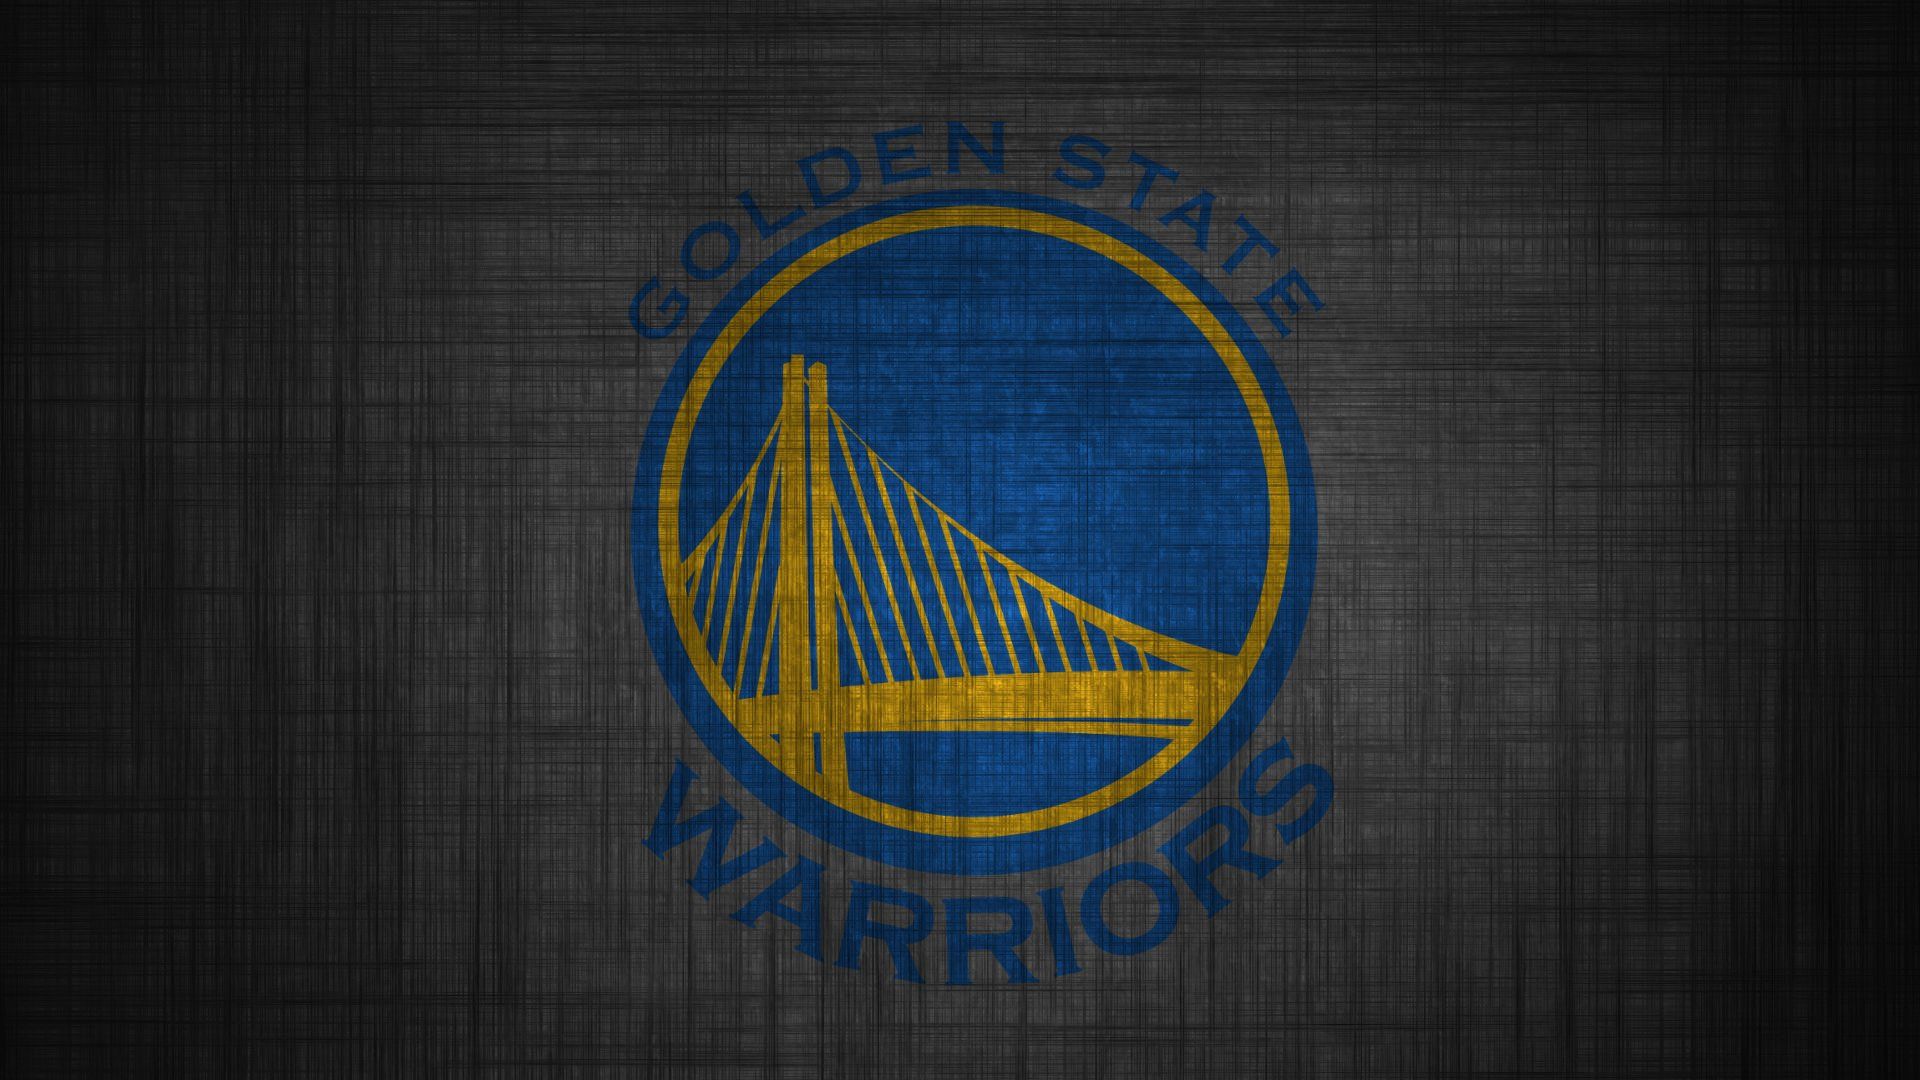 33+] Golden State Warriors NBA Champions 2022 Wallpapers - WallpaperSafari